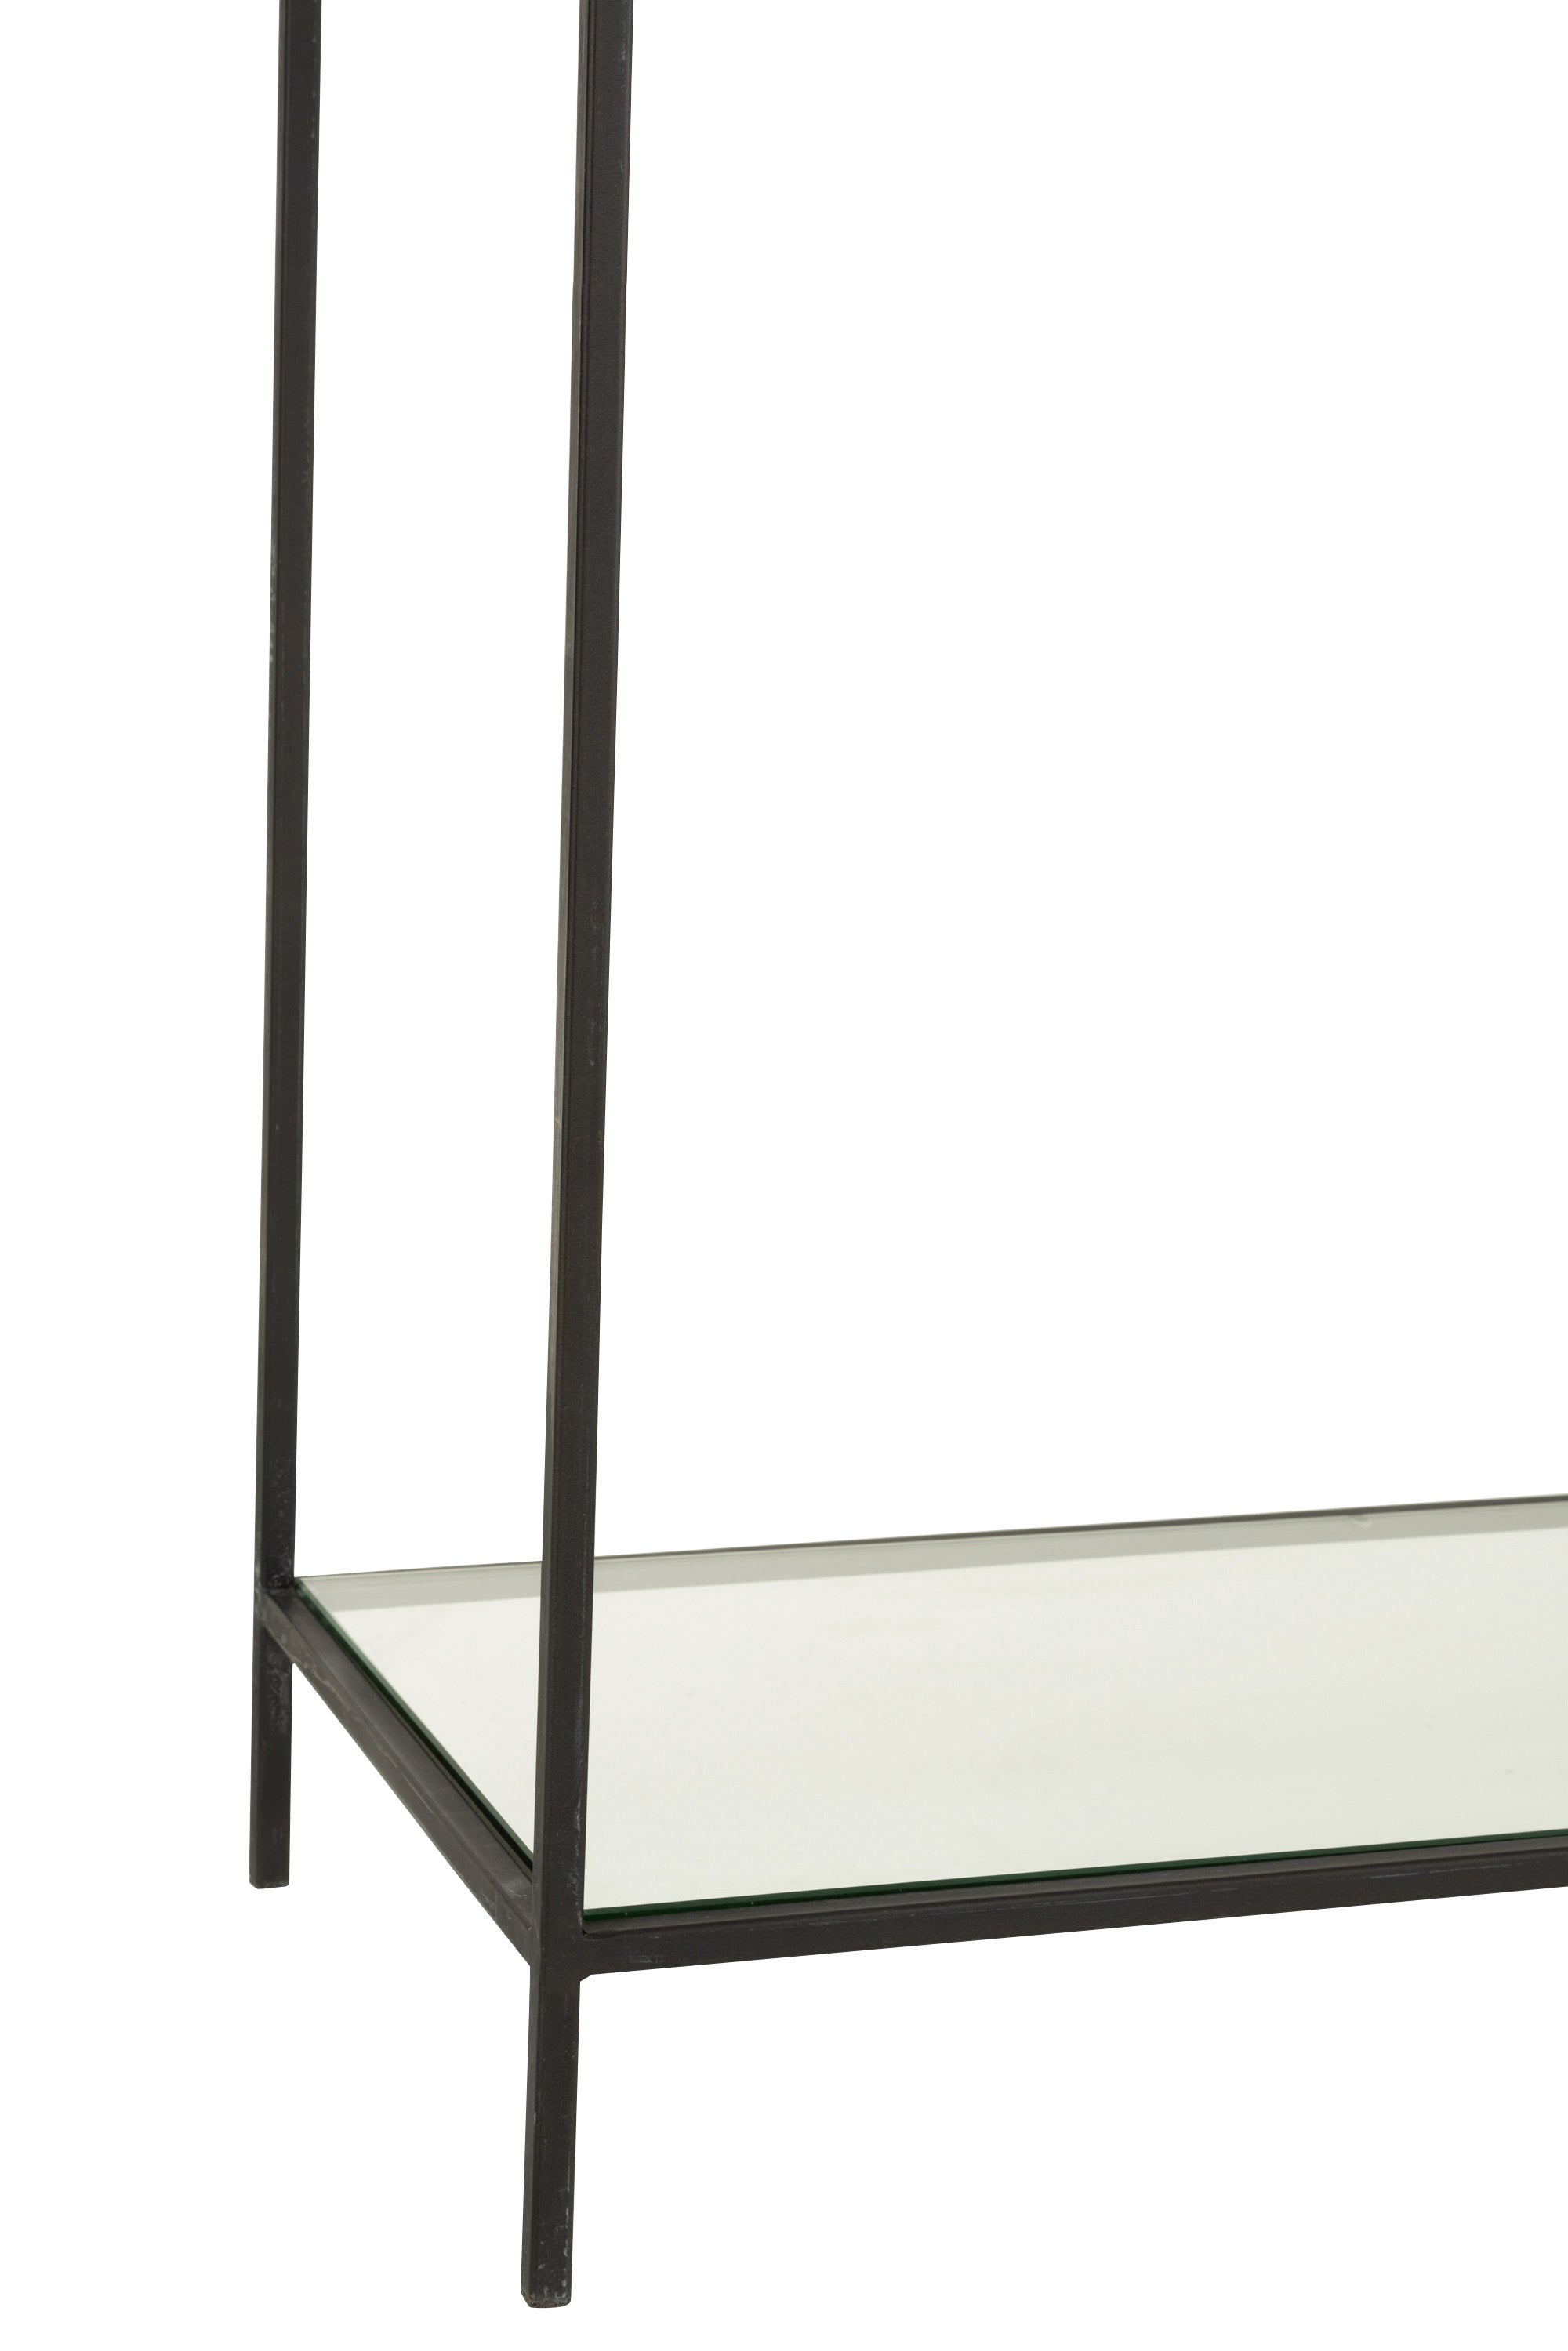 REGAL 2 TEILE KREIS METALL/GLAS SCHWARZ (180,5x40x200,5cm)